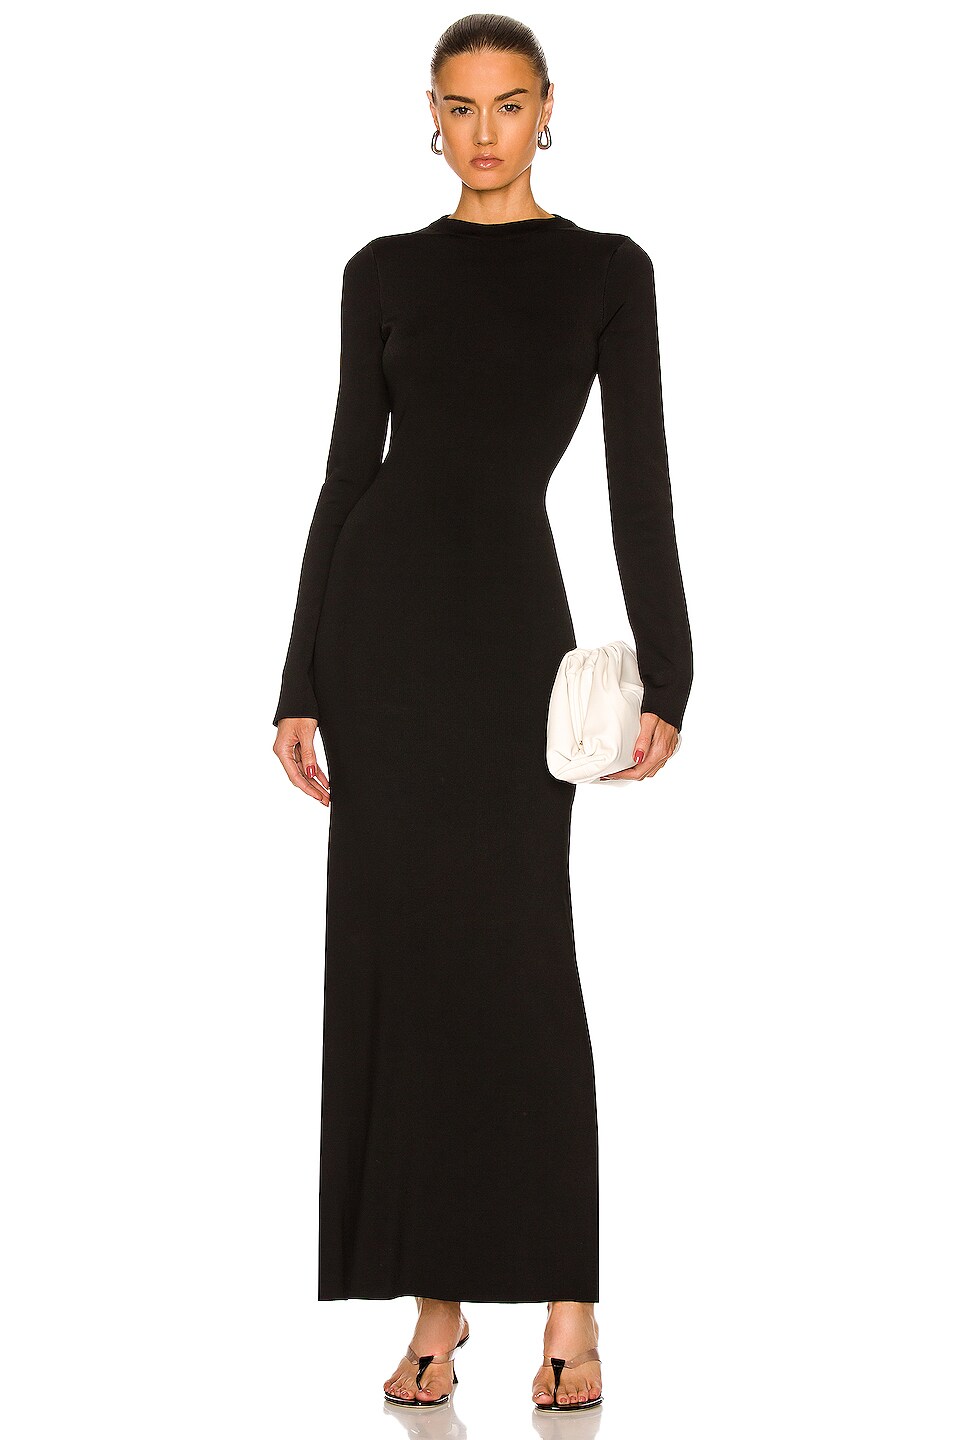 GALVAN Athena Pearl Dress in Black | FWRD